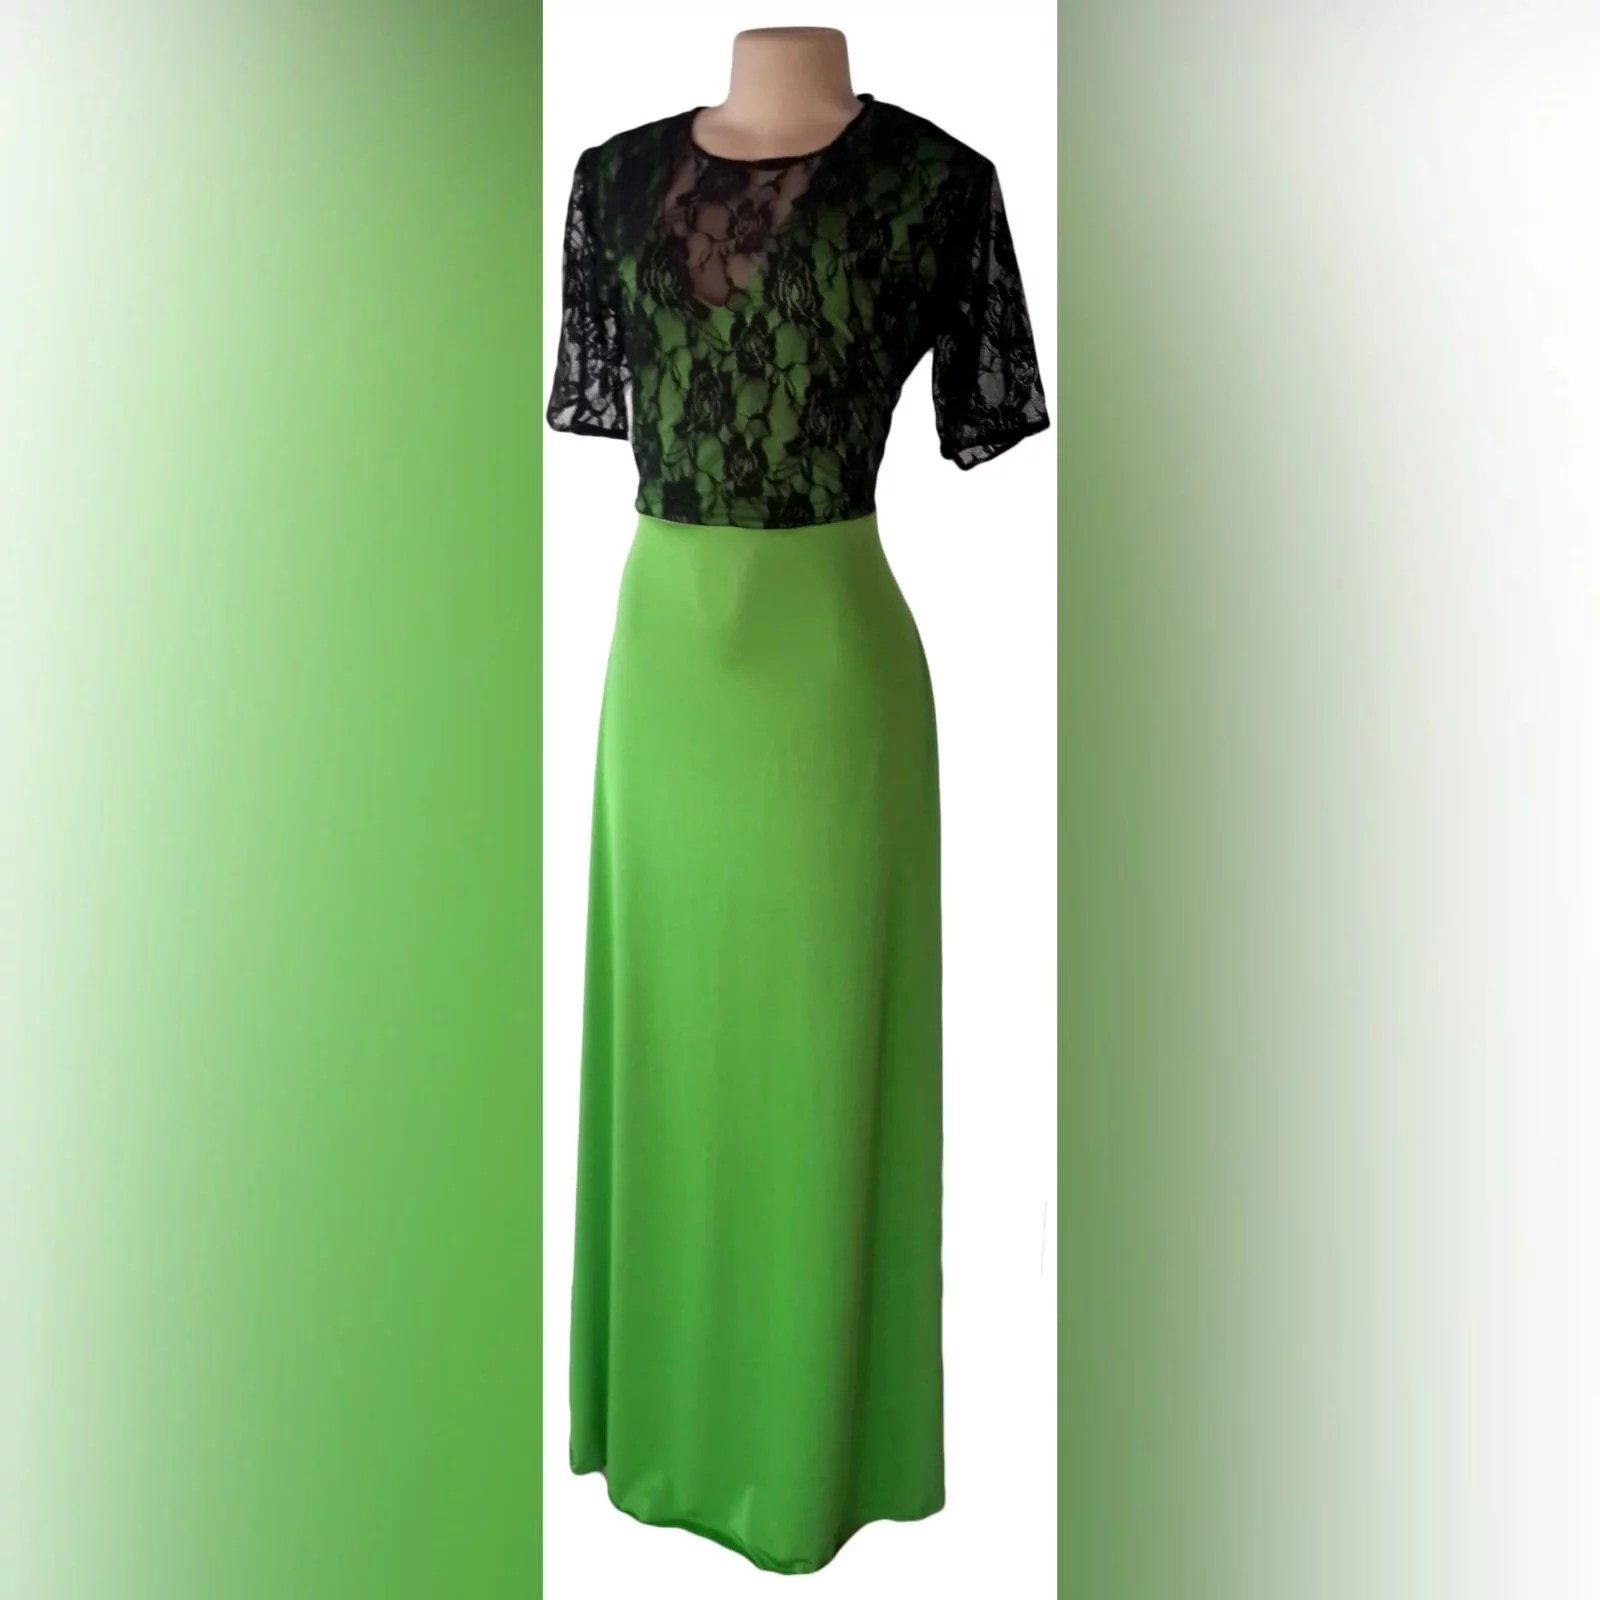 Green and black bridesmaid dresses 4 green & black bridesmaid dresses. Bodice with an overlayer of black lace.